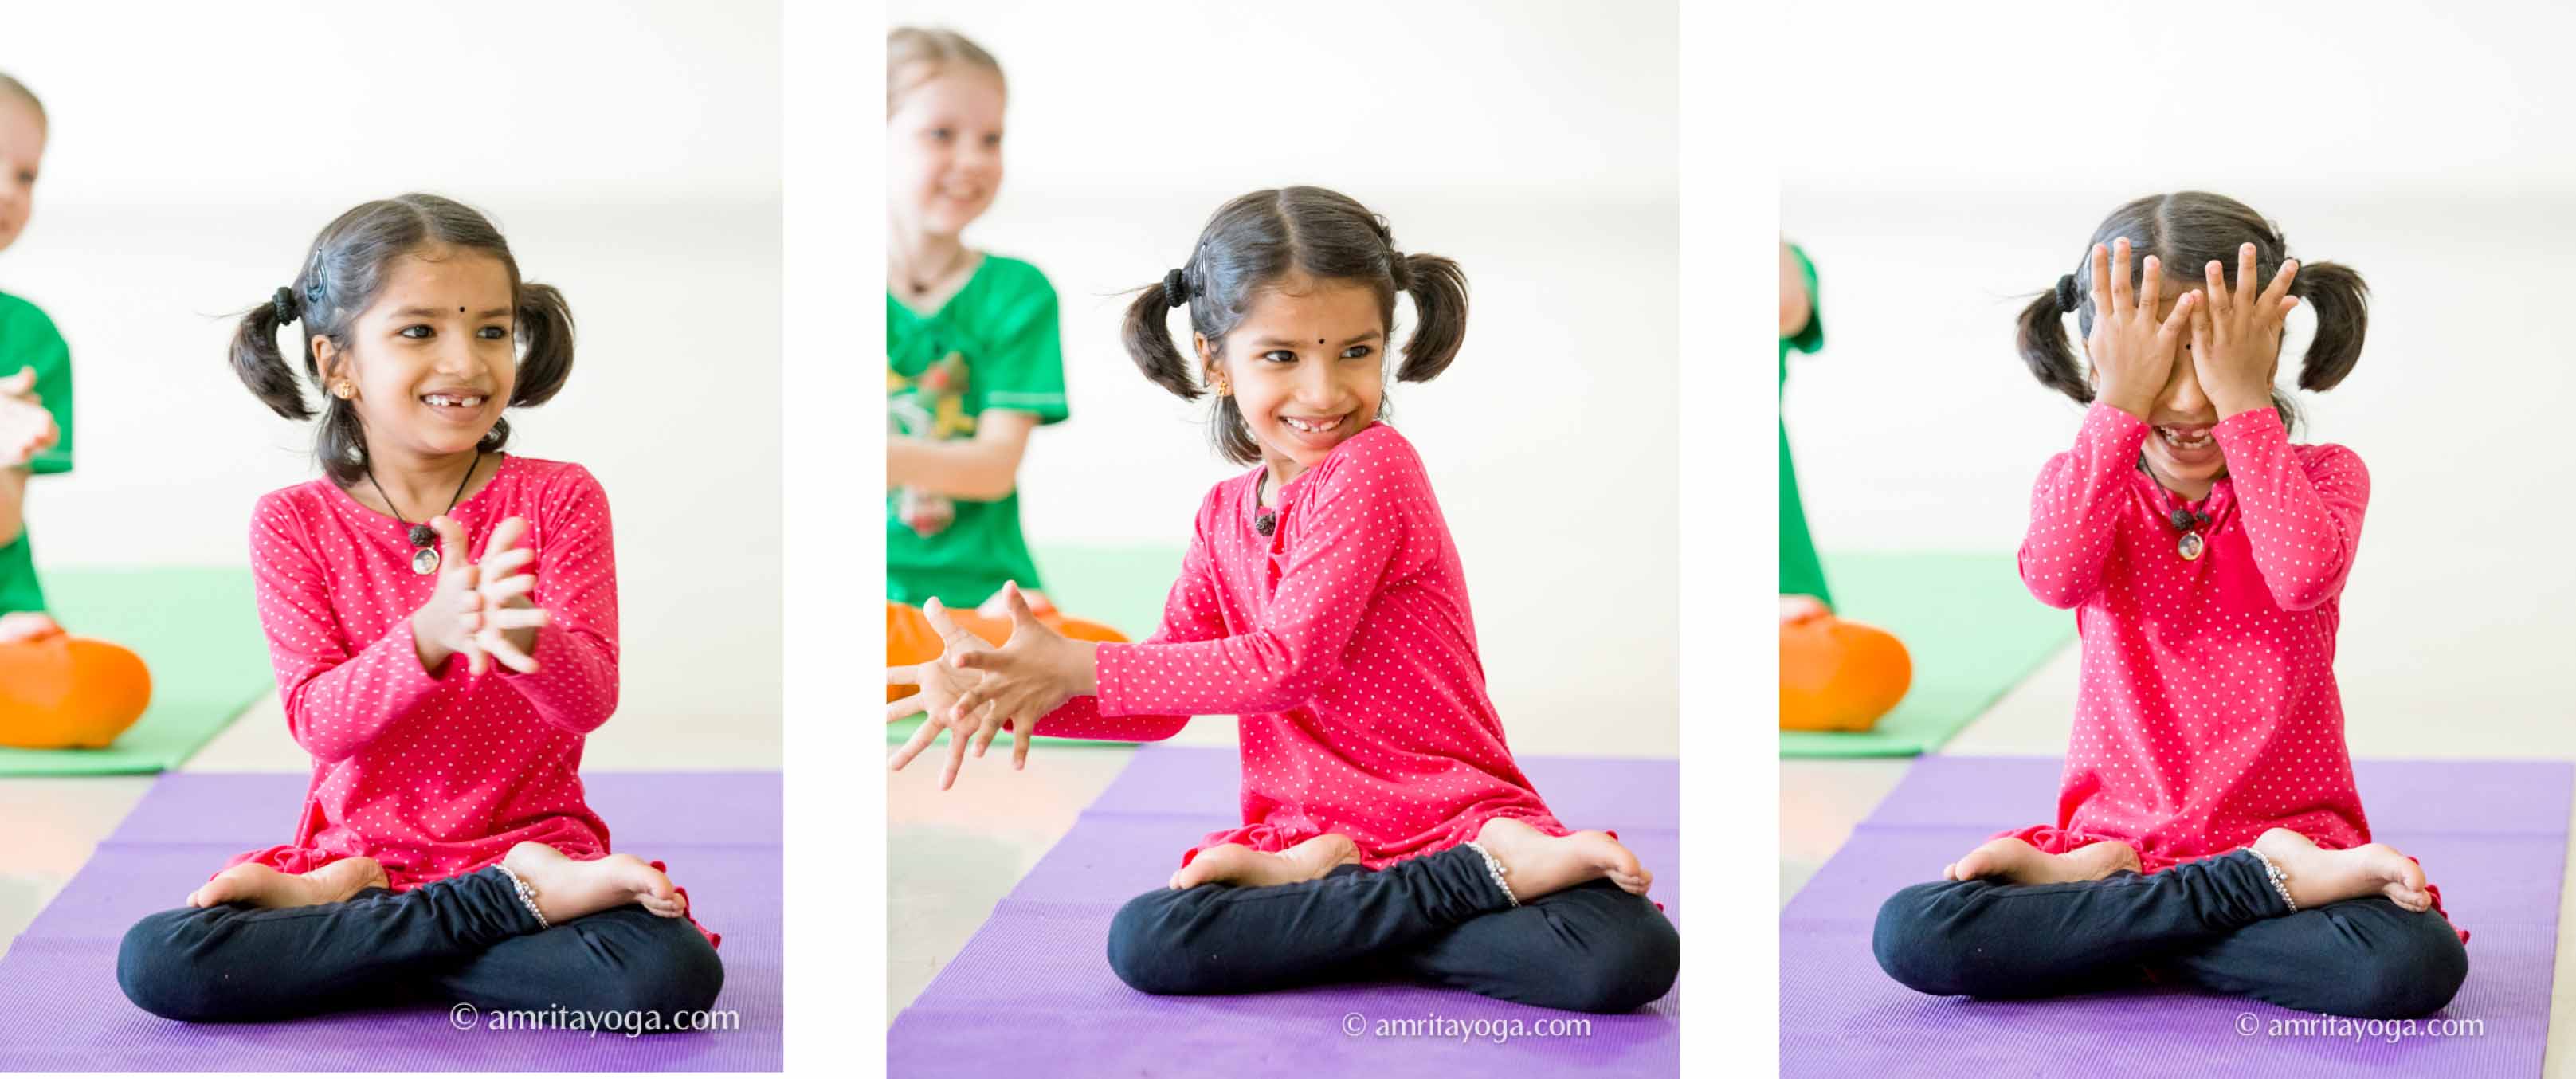 amrita yoga kids series